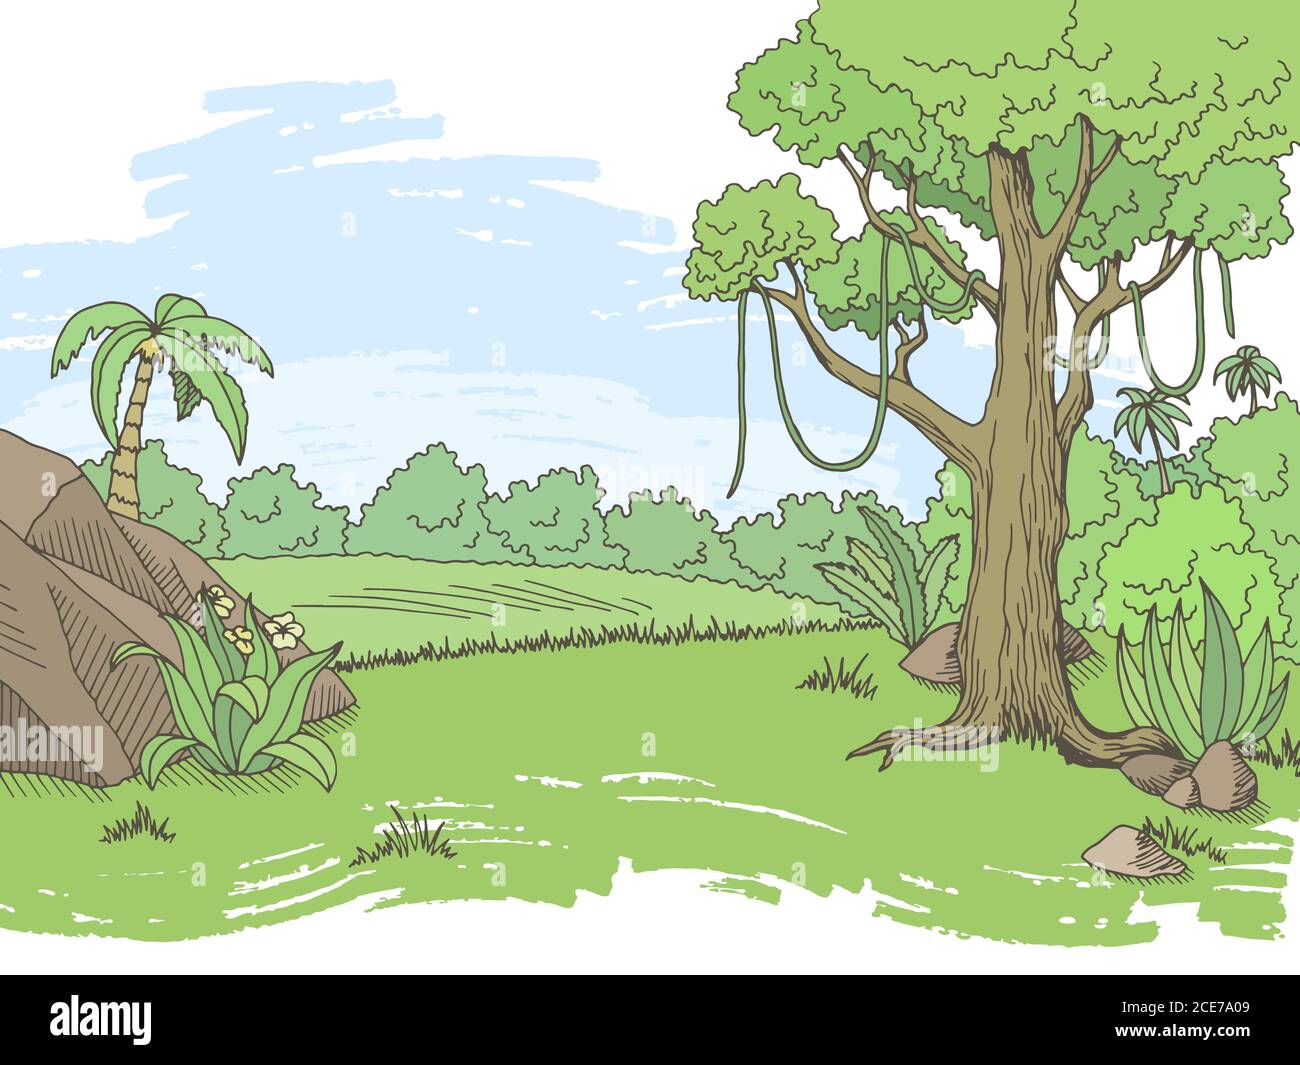 Dschungel Wald Grafik Farbe Landschaft Skizze Illustration Vektor Stock Vektor